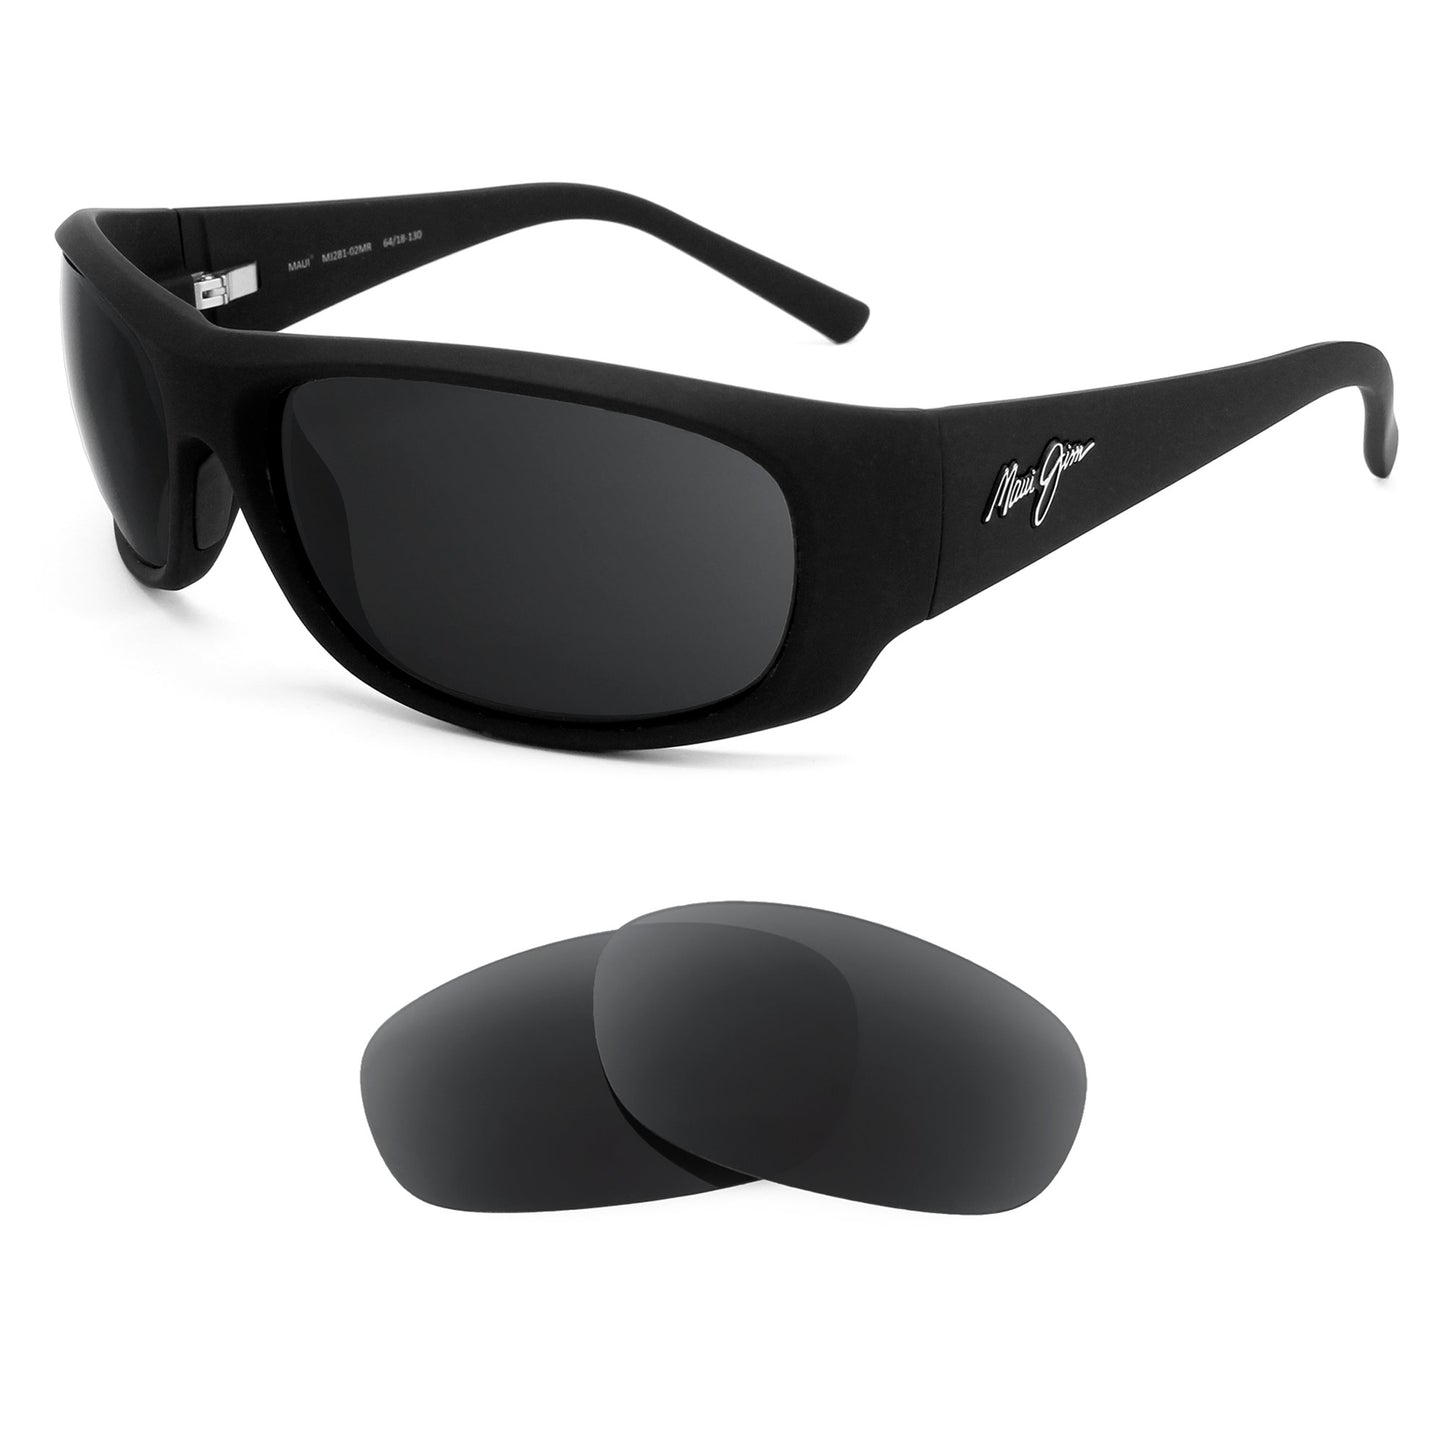 Maui Jim Ikaika MJ281 sunglasses with replacement lenses